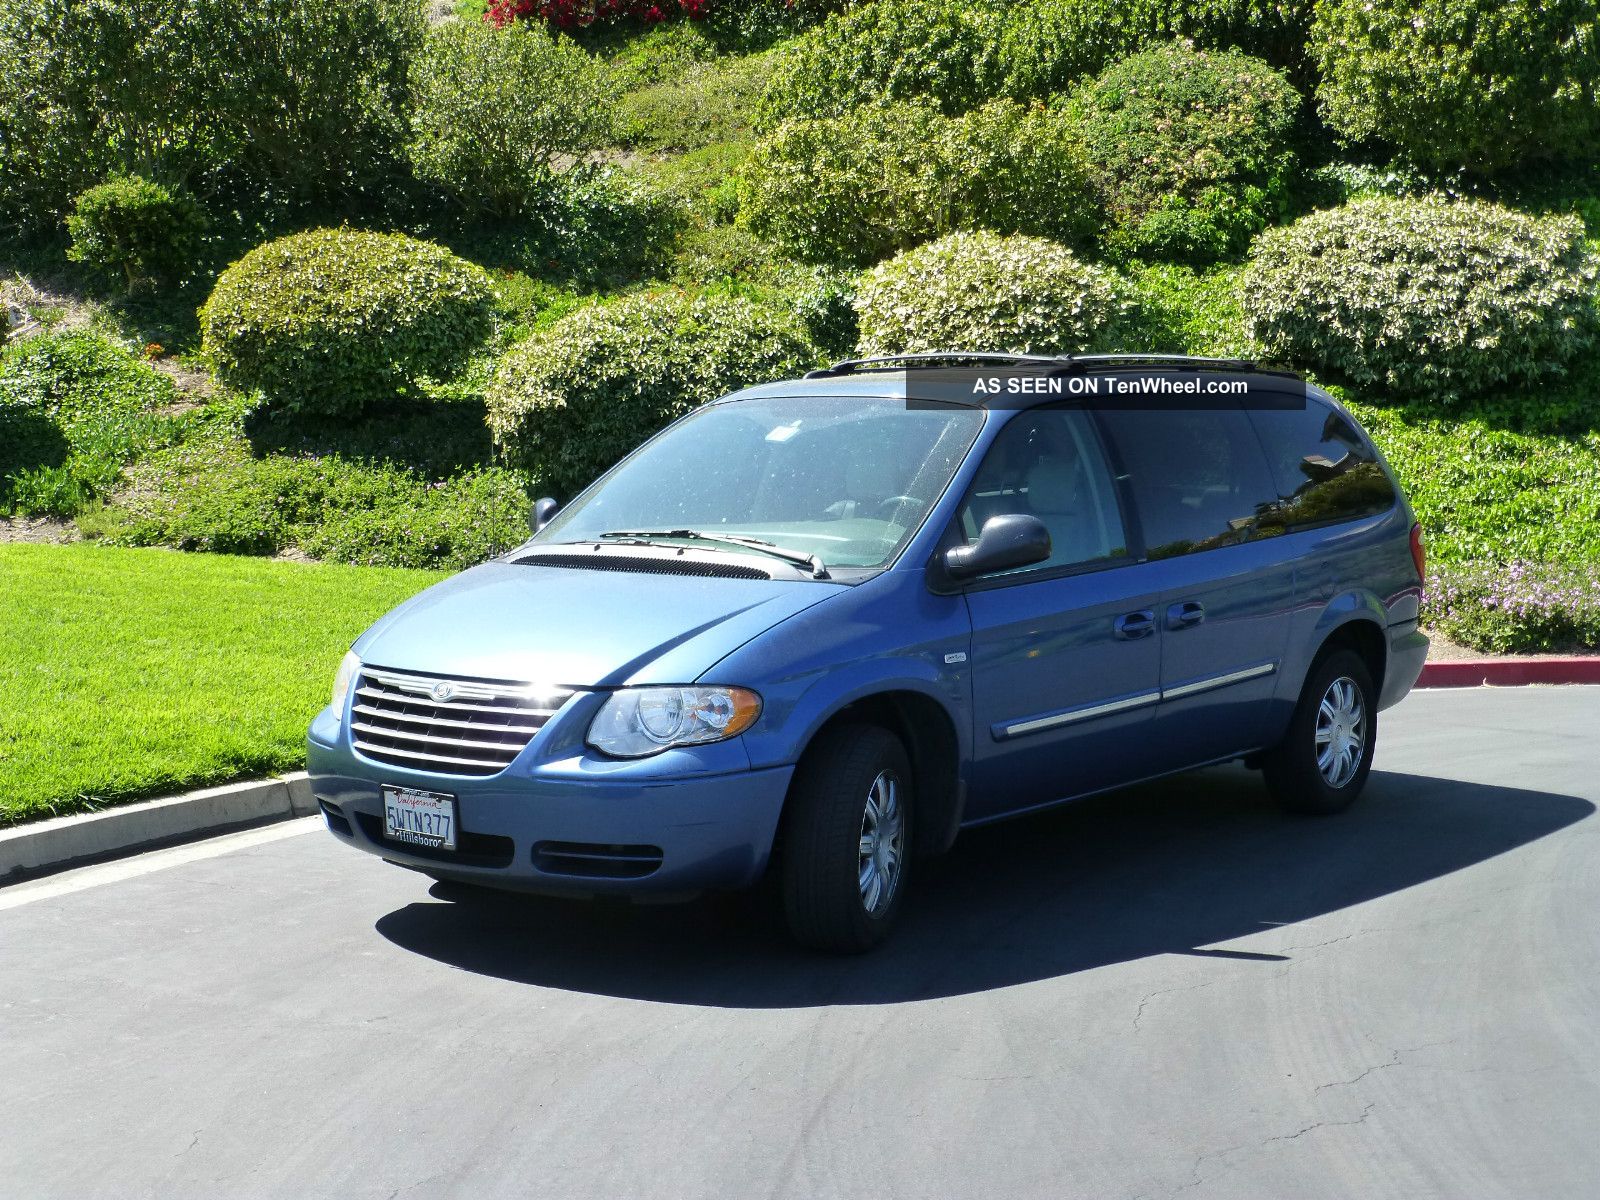 Chrysler town and country 2005 minivan recalls #2